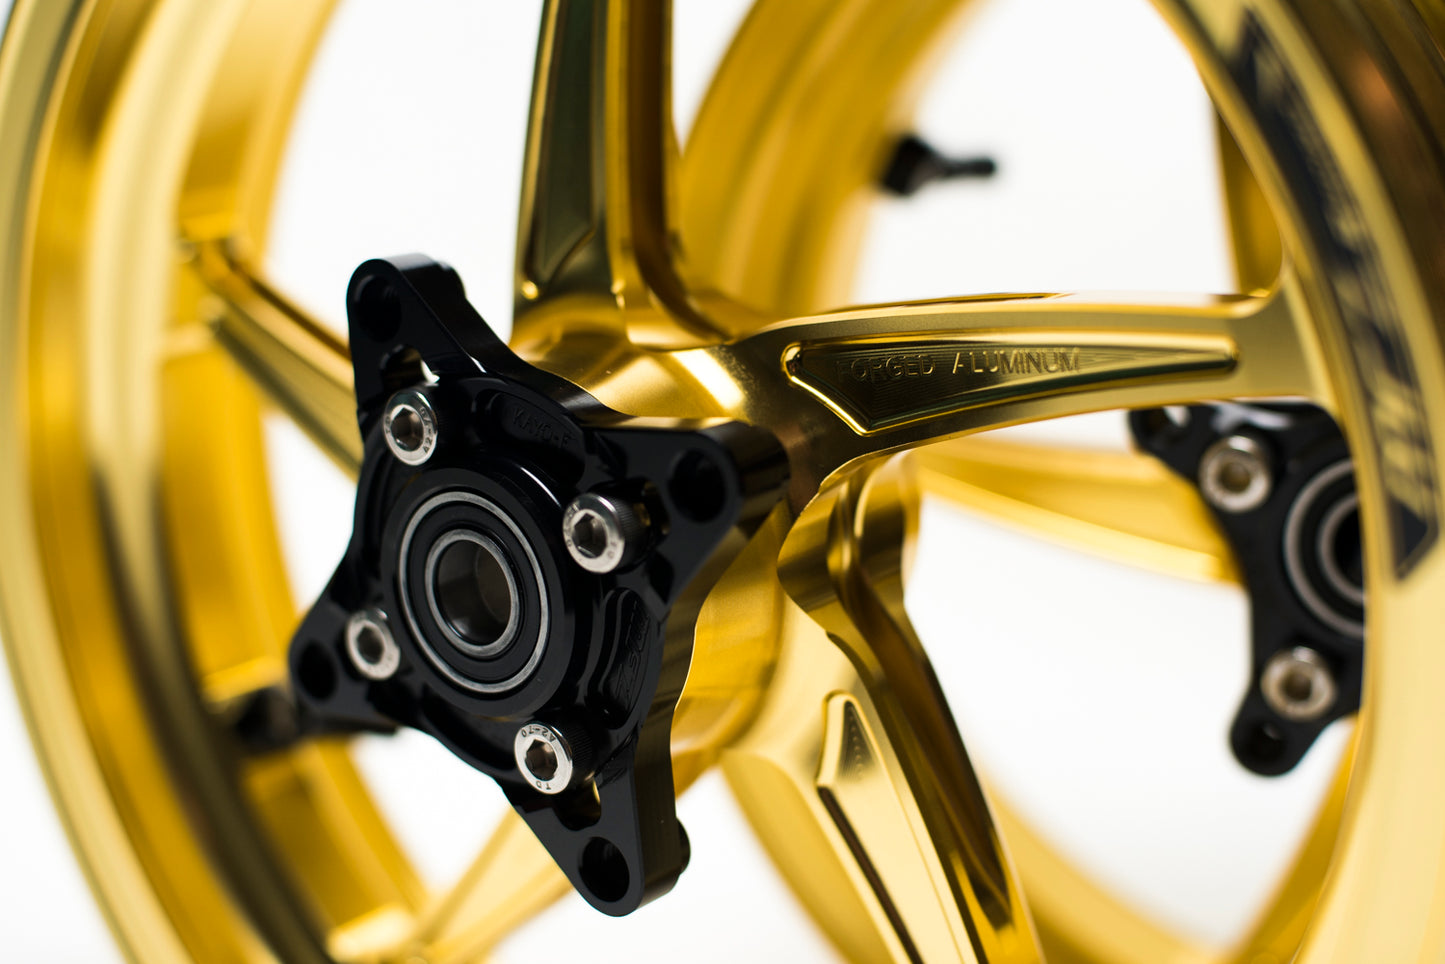 MFZ Kayo Forged Super Light Weight Aluminium Wheels - Gold